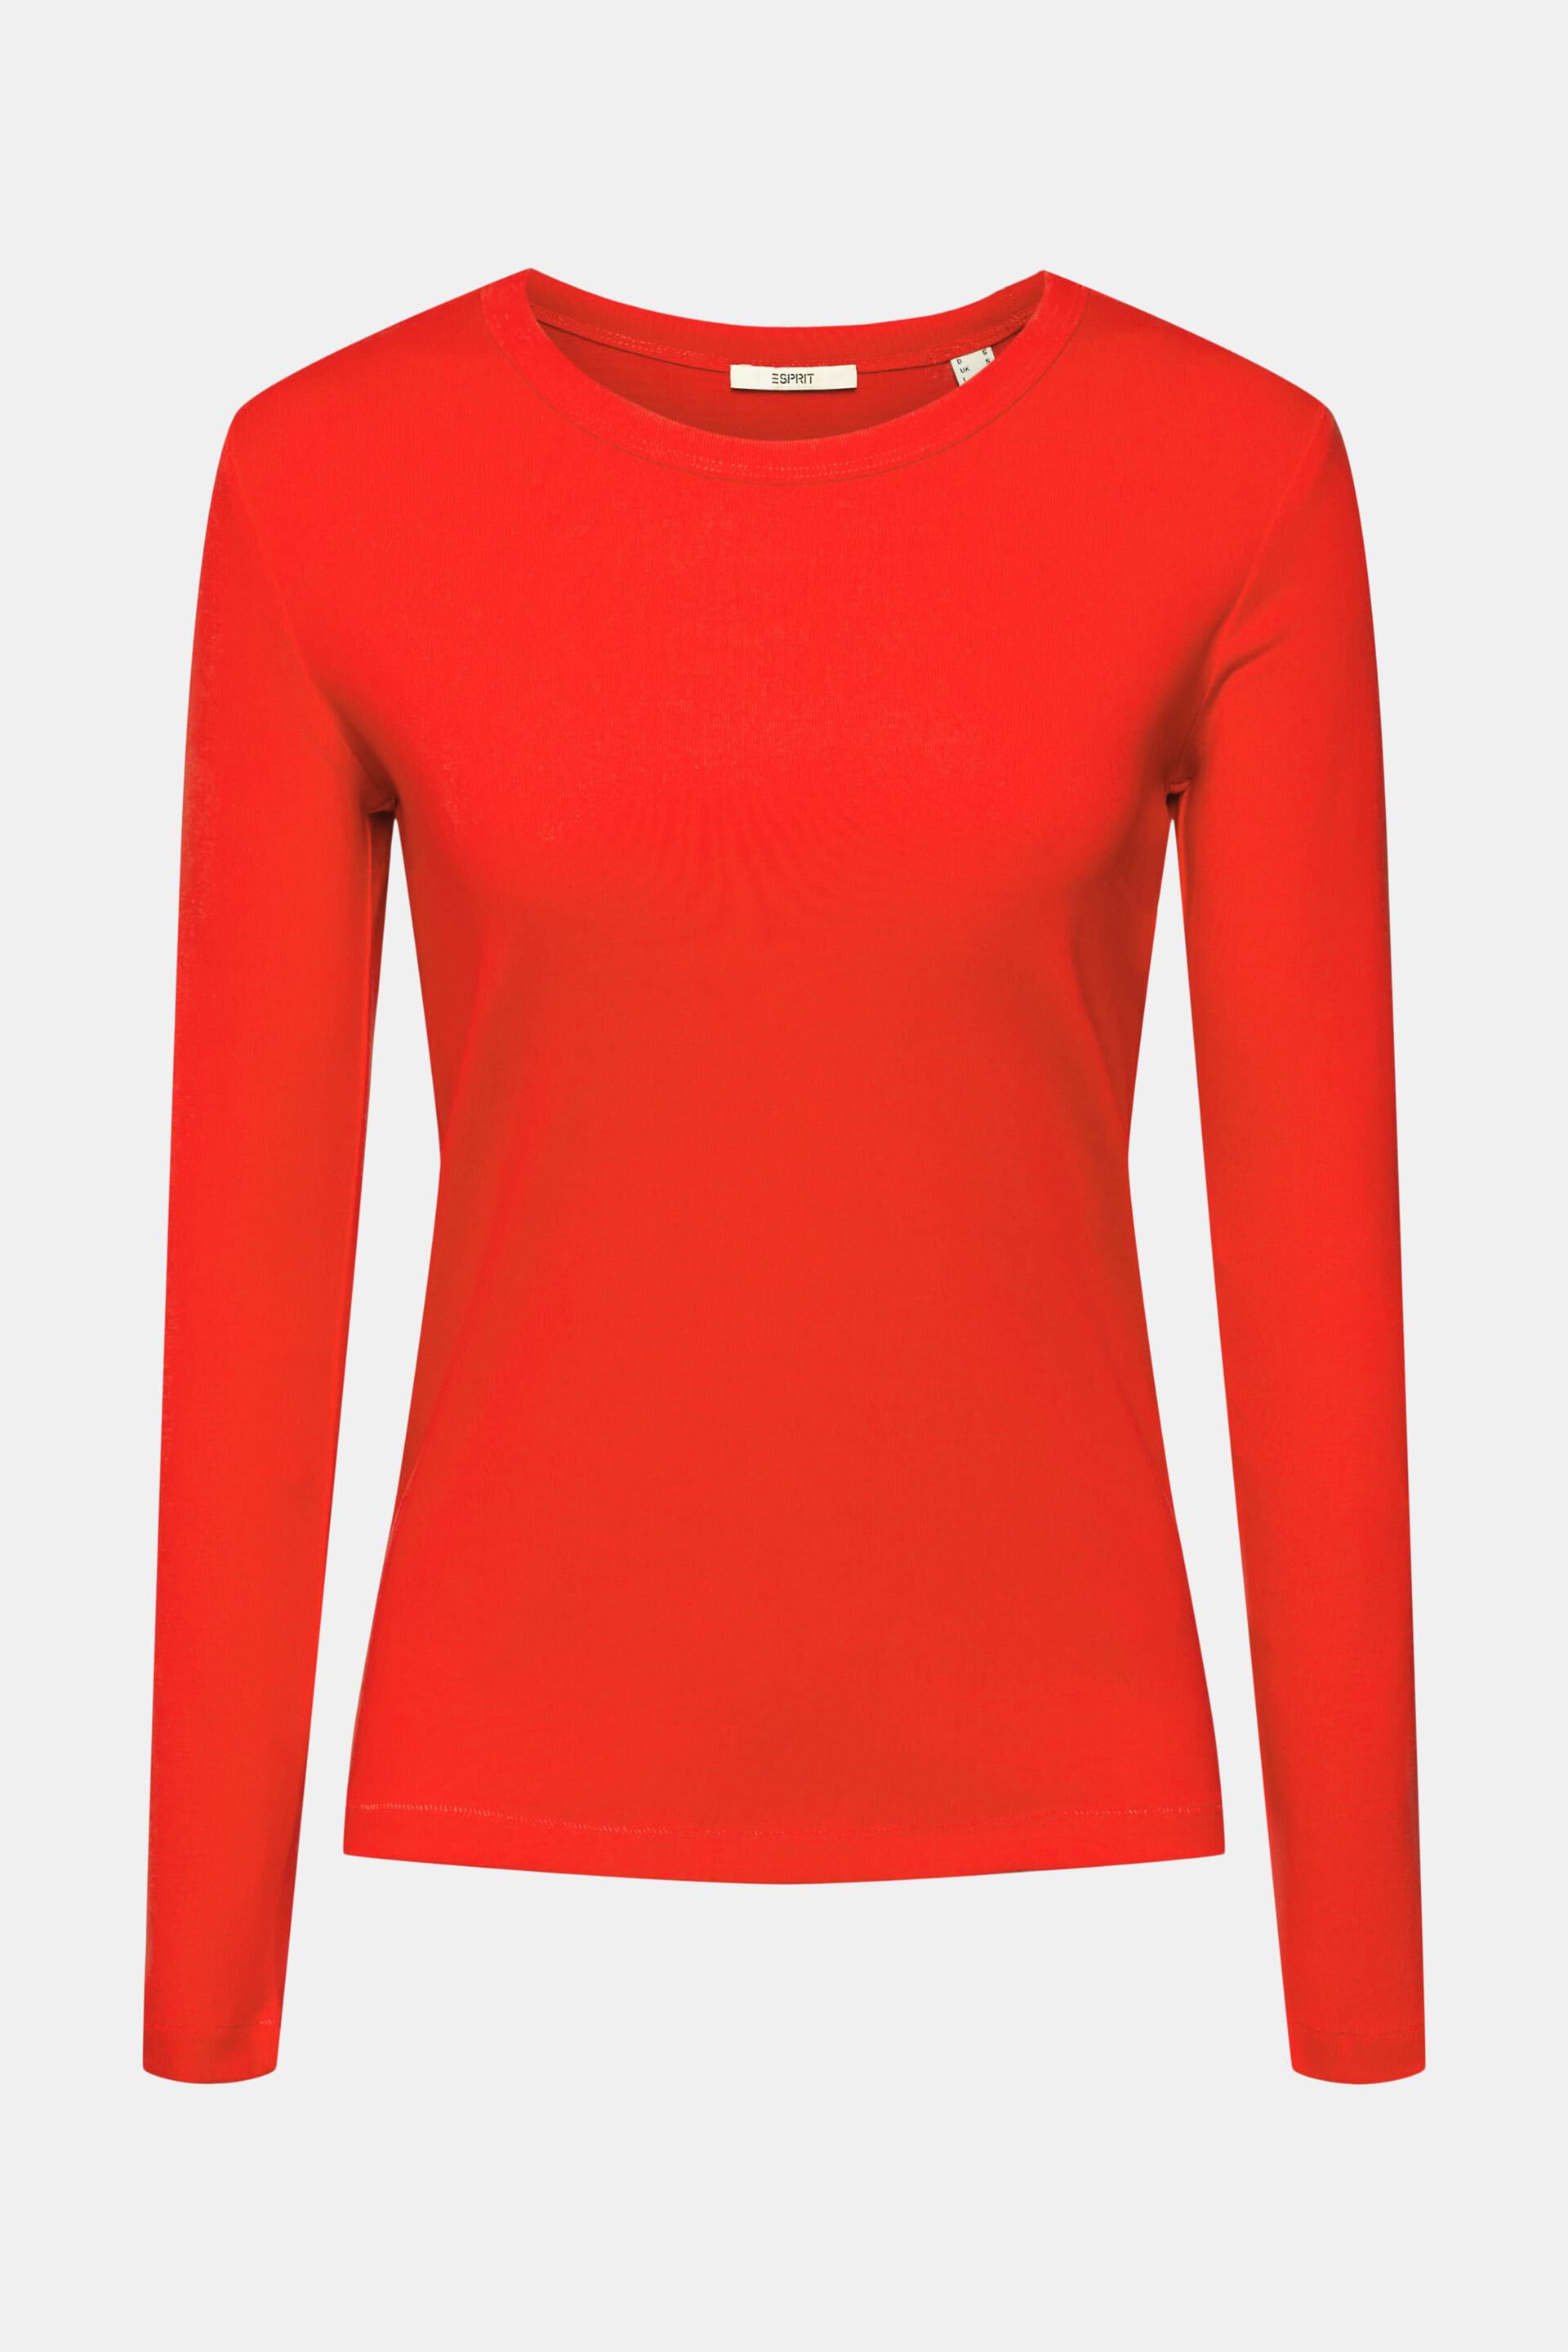 Esprit Longesleeve licht Oranje casual uitstraling Mode Shirts Longsleeves 